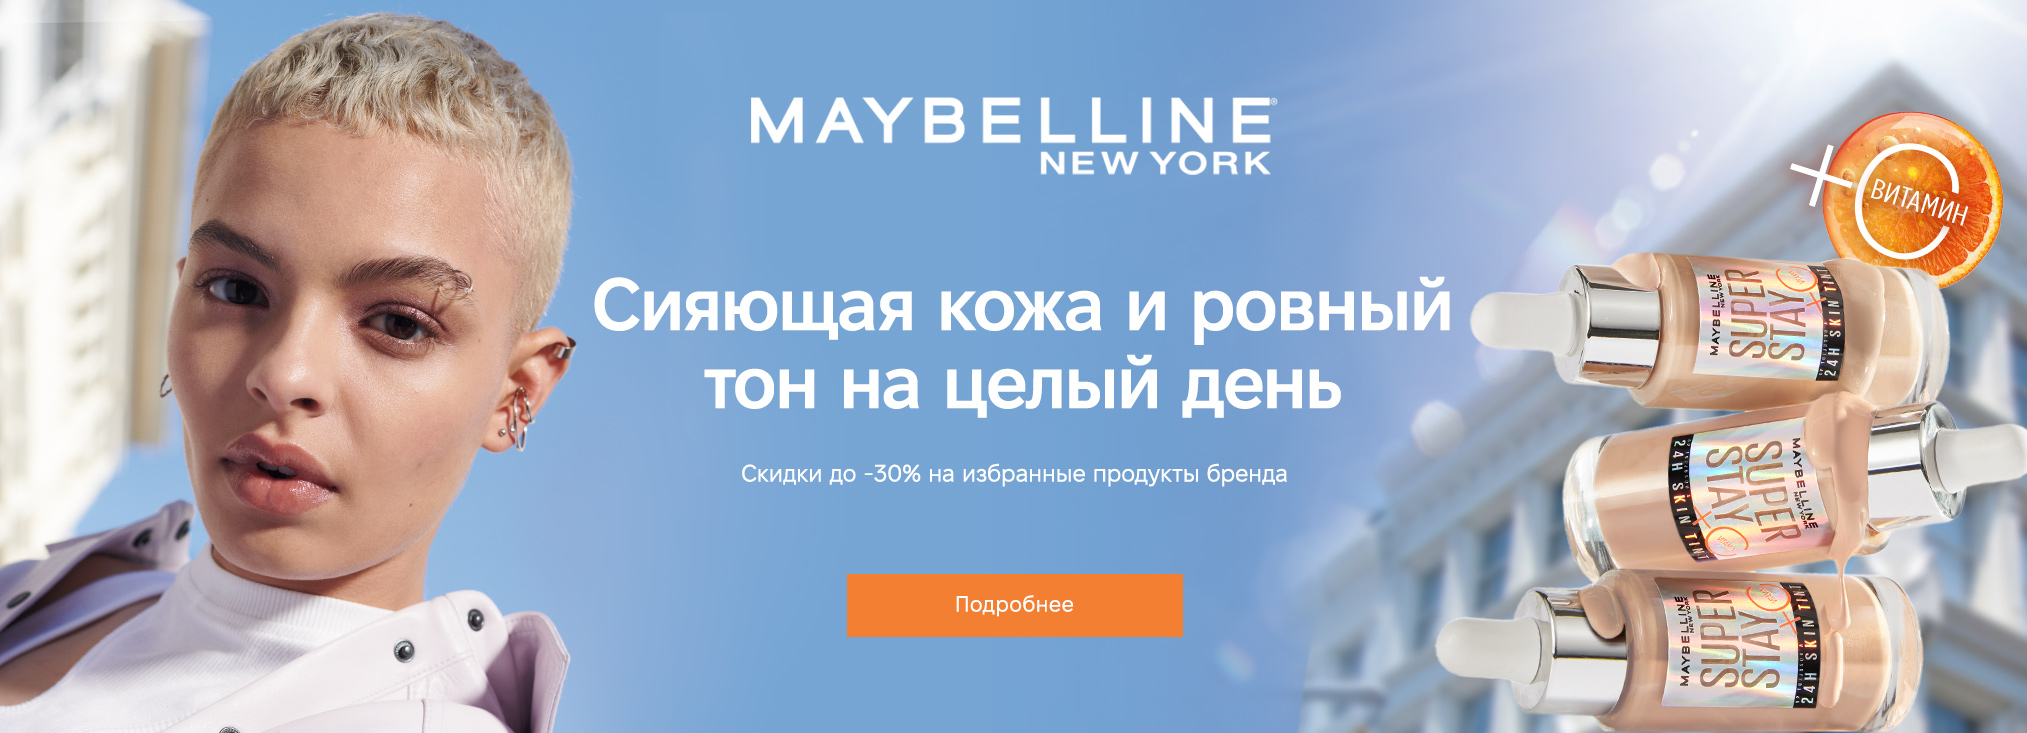 Maybelline New York_2419